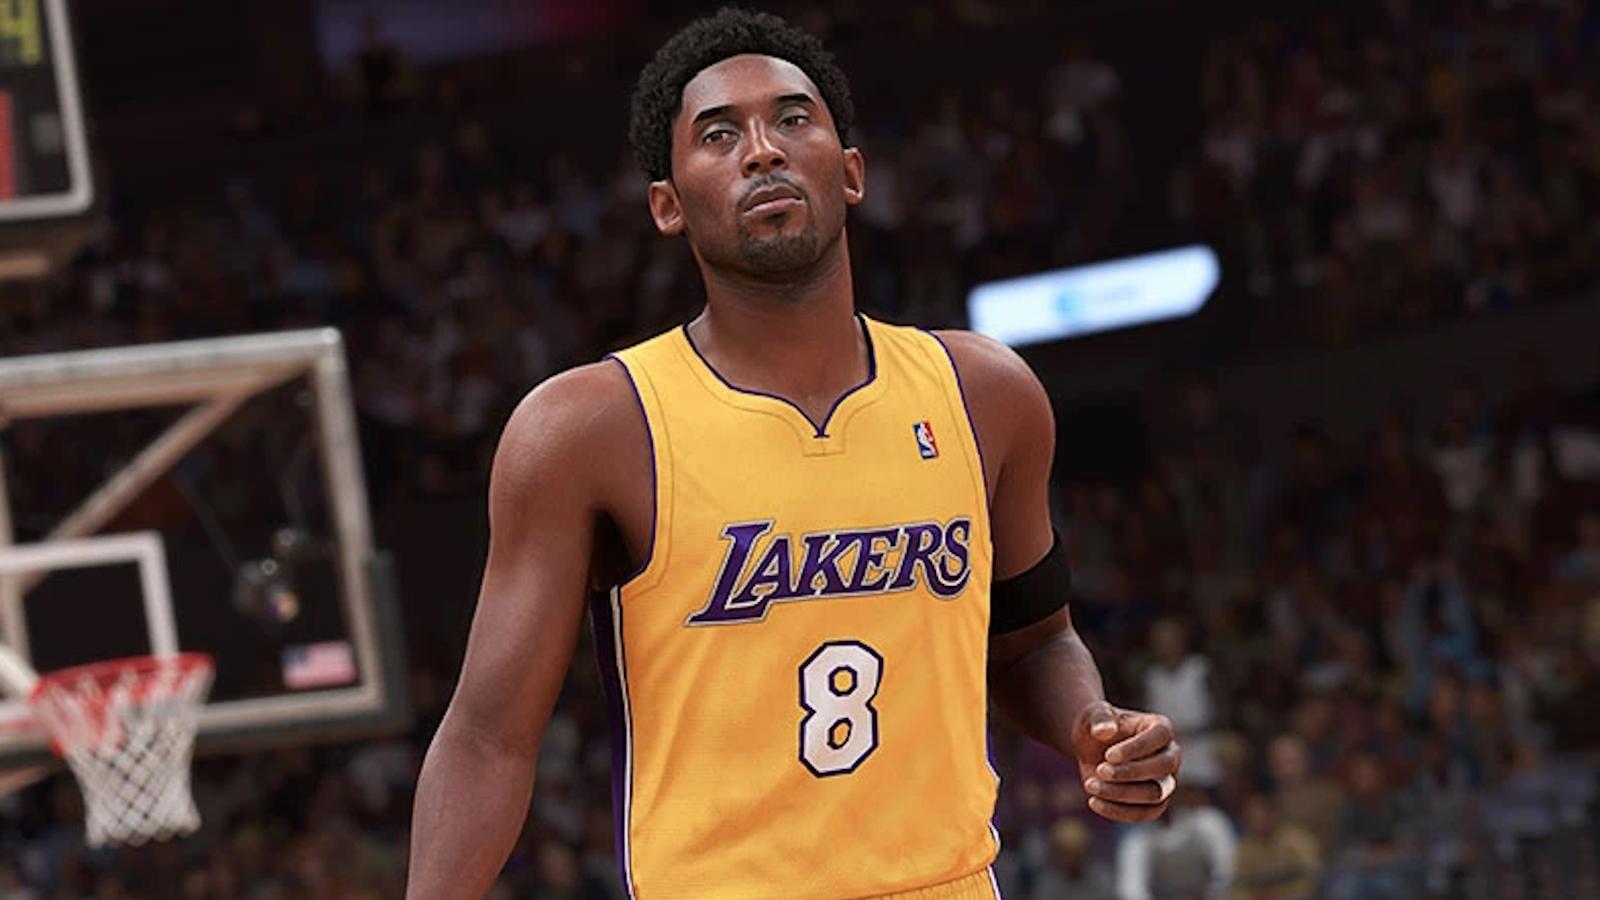 NBA 2K23 Michael Jordan Edition - PC [Steam Online Game Code]